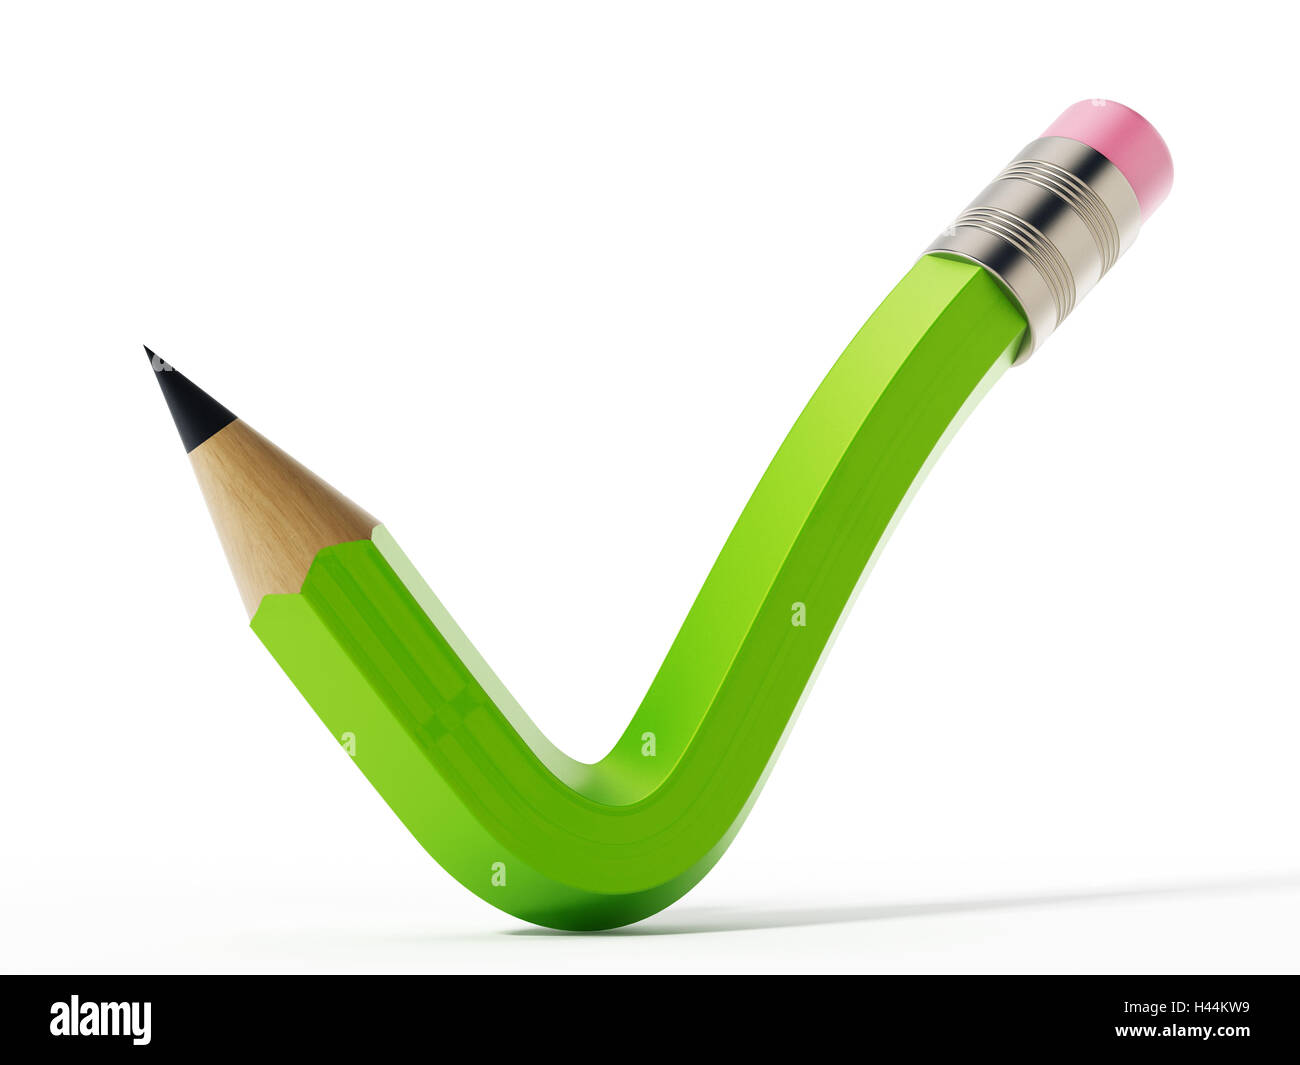 Pencil shaped like a checkmark symbol. 3D illustration. Stock Photo